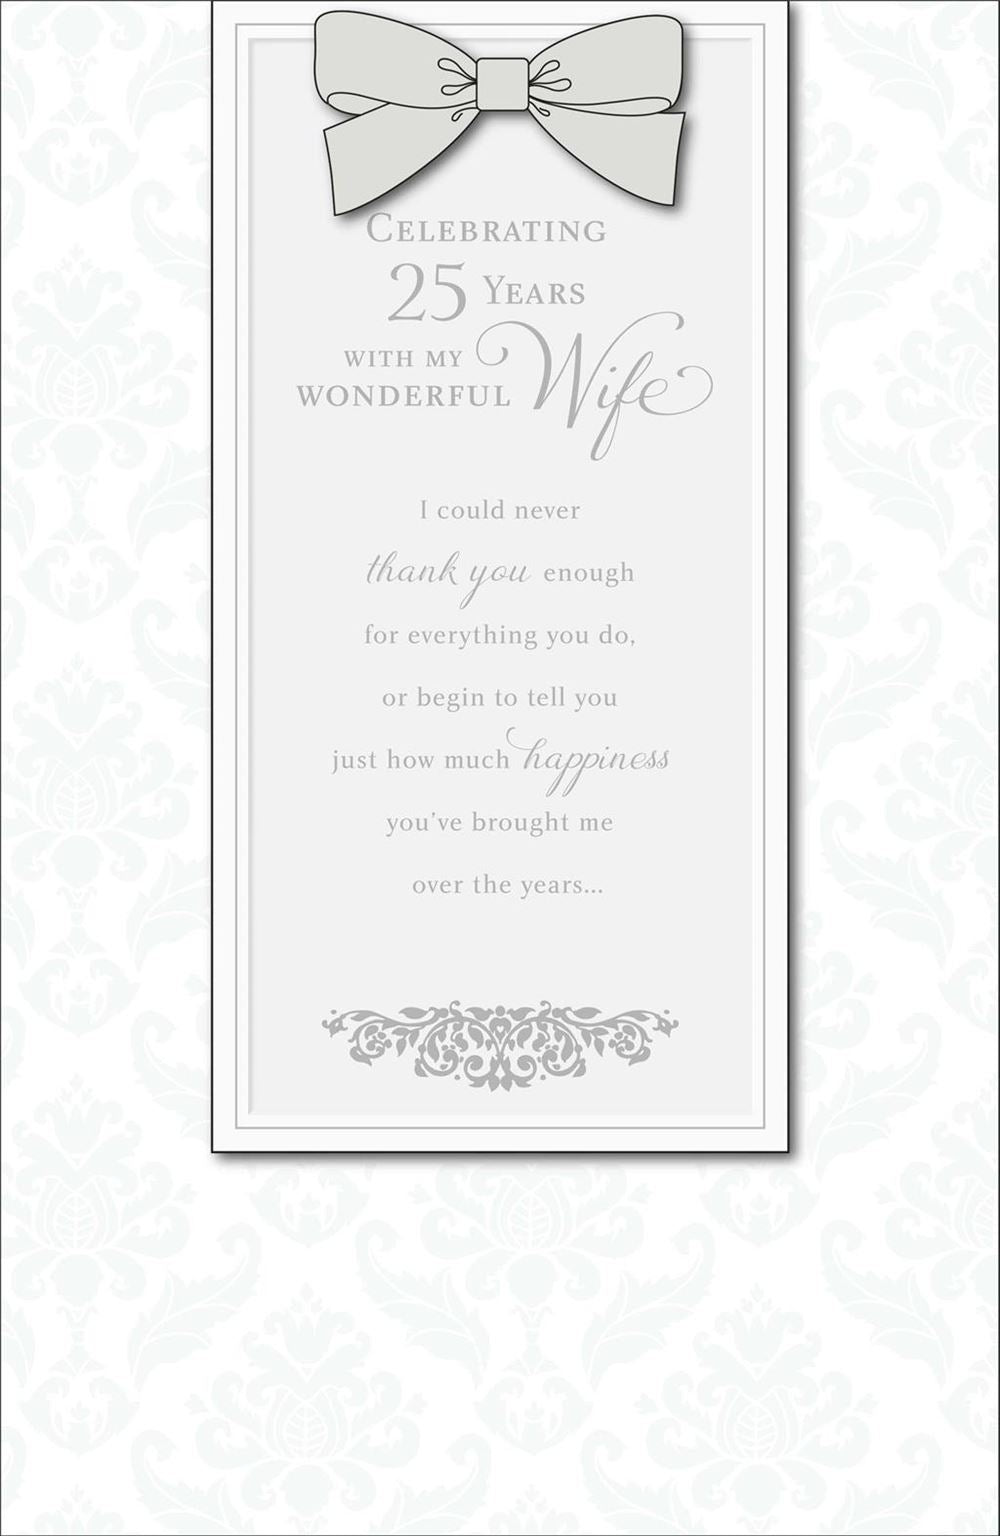 Wife's 25th Wedding Anniversary Card - Elegant Purple Bow and Heartfelt Sentiments